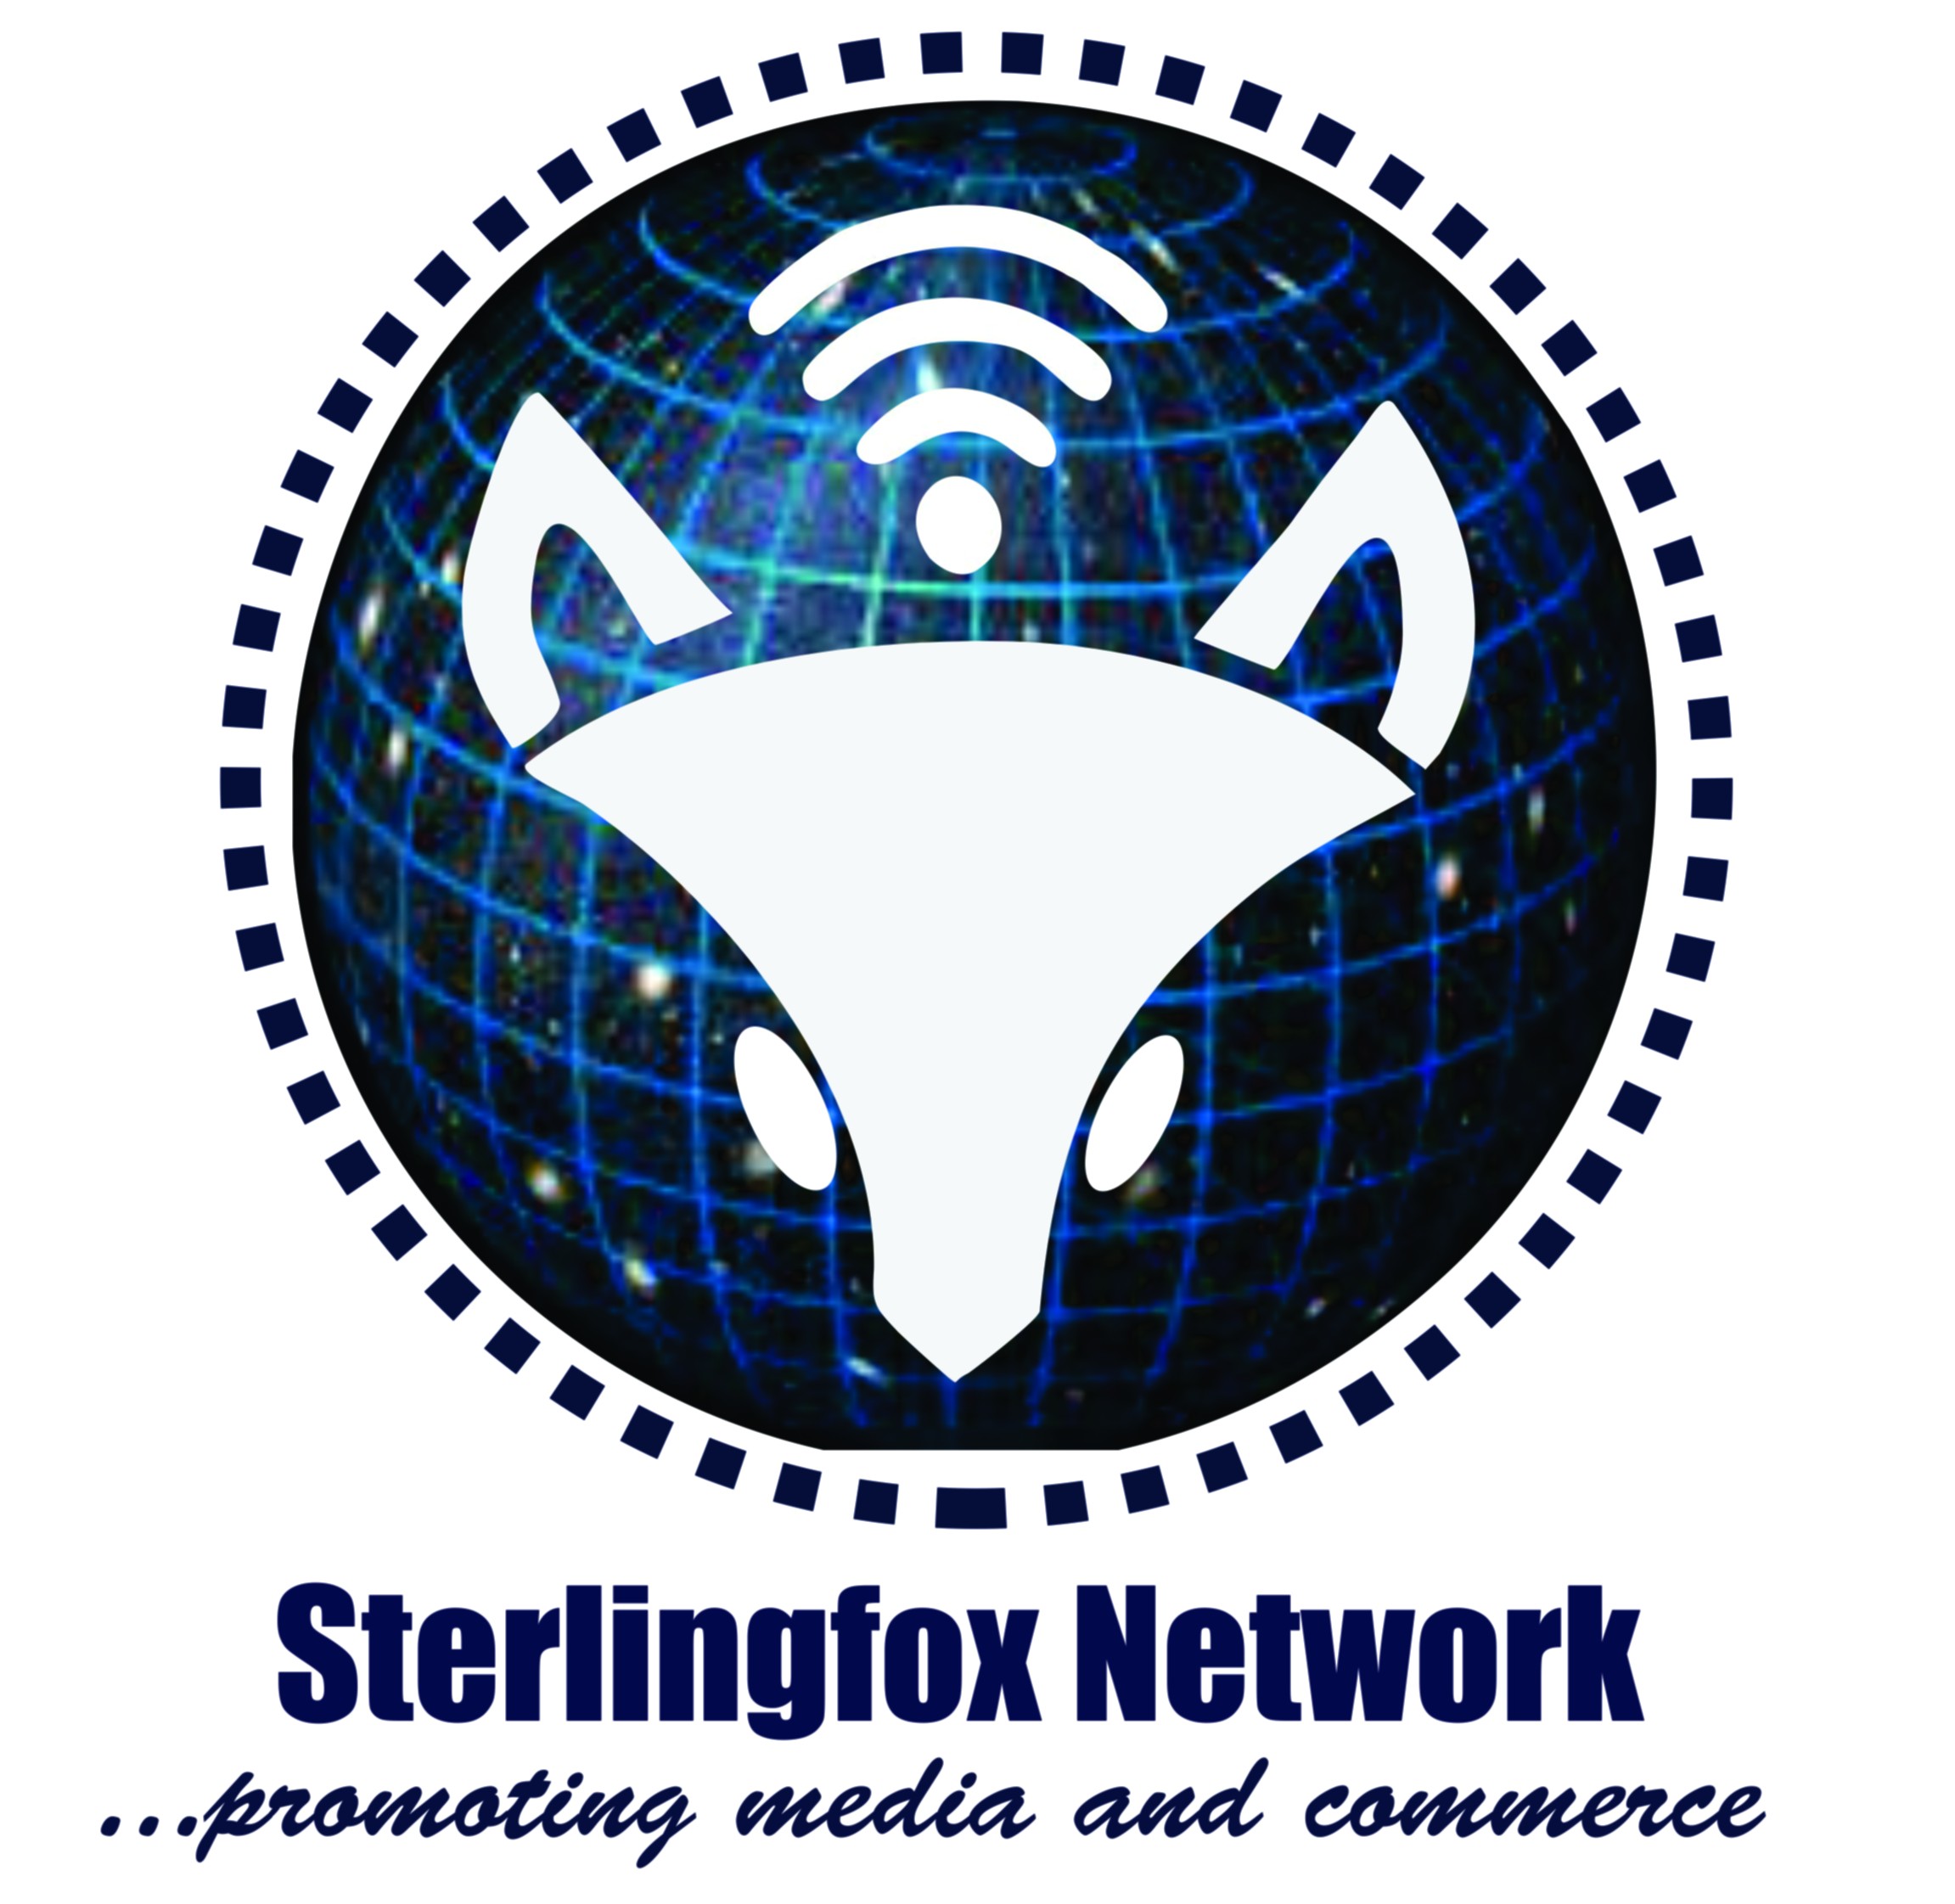 Sterlingfox Network emblem